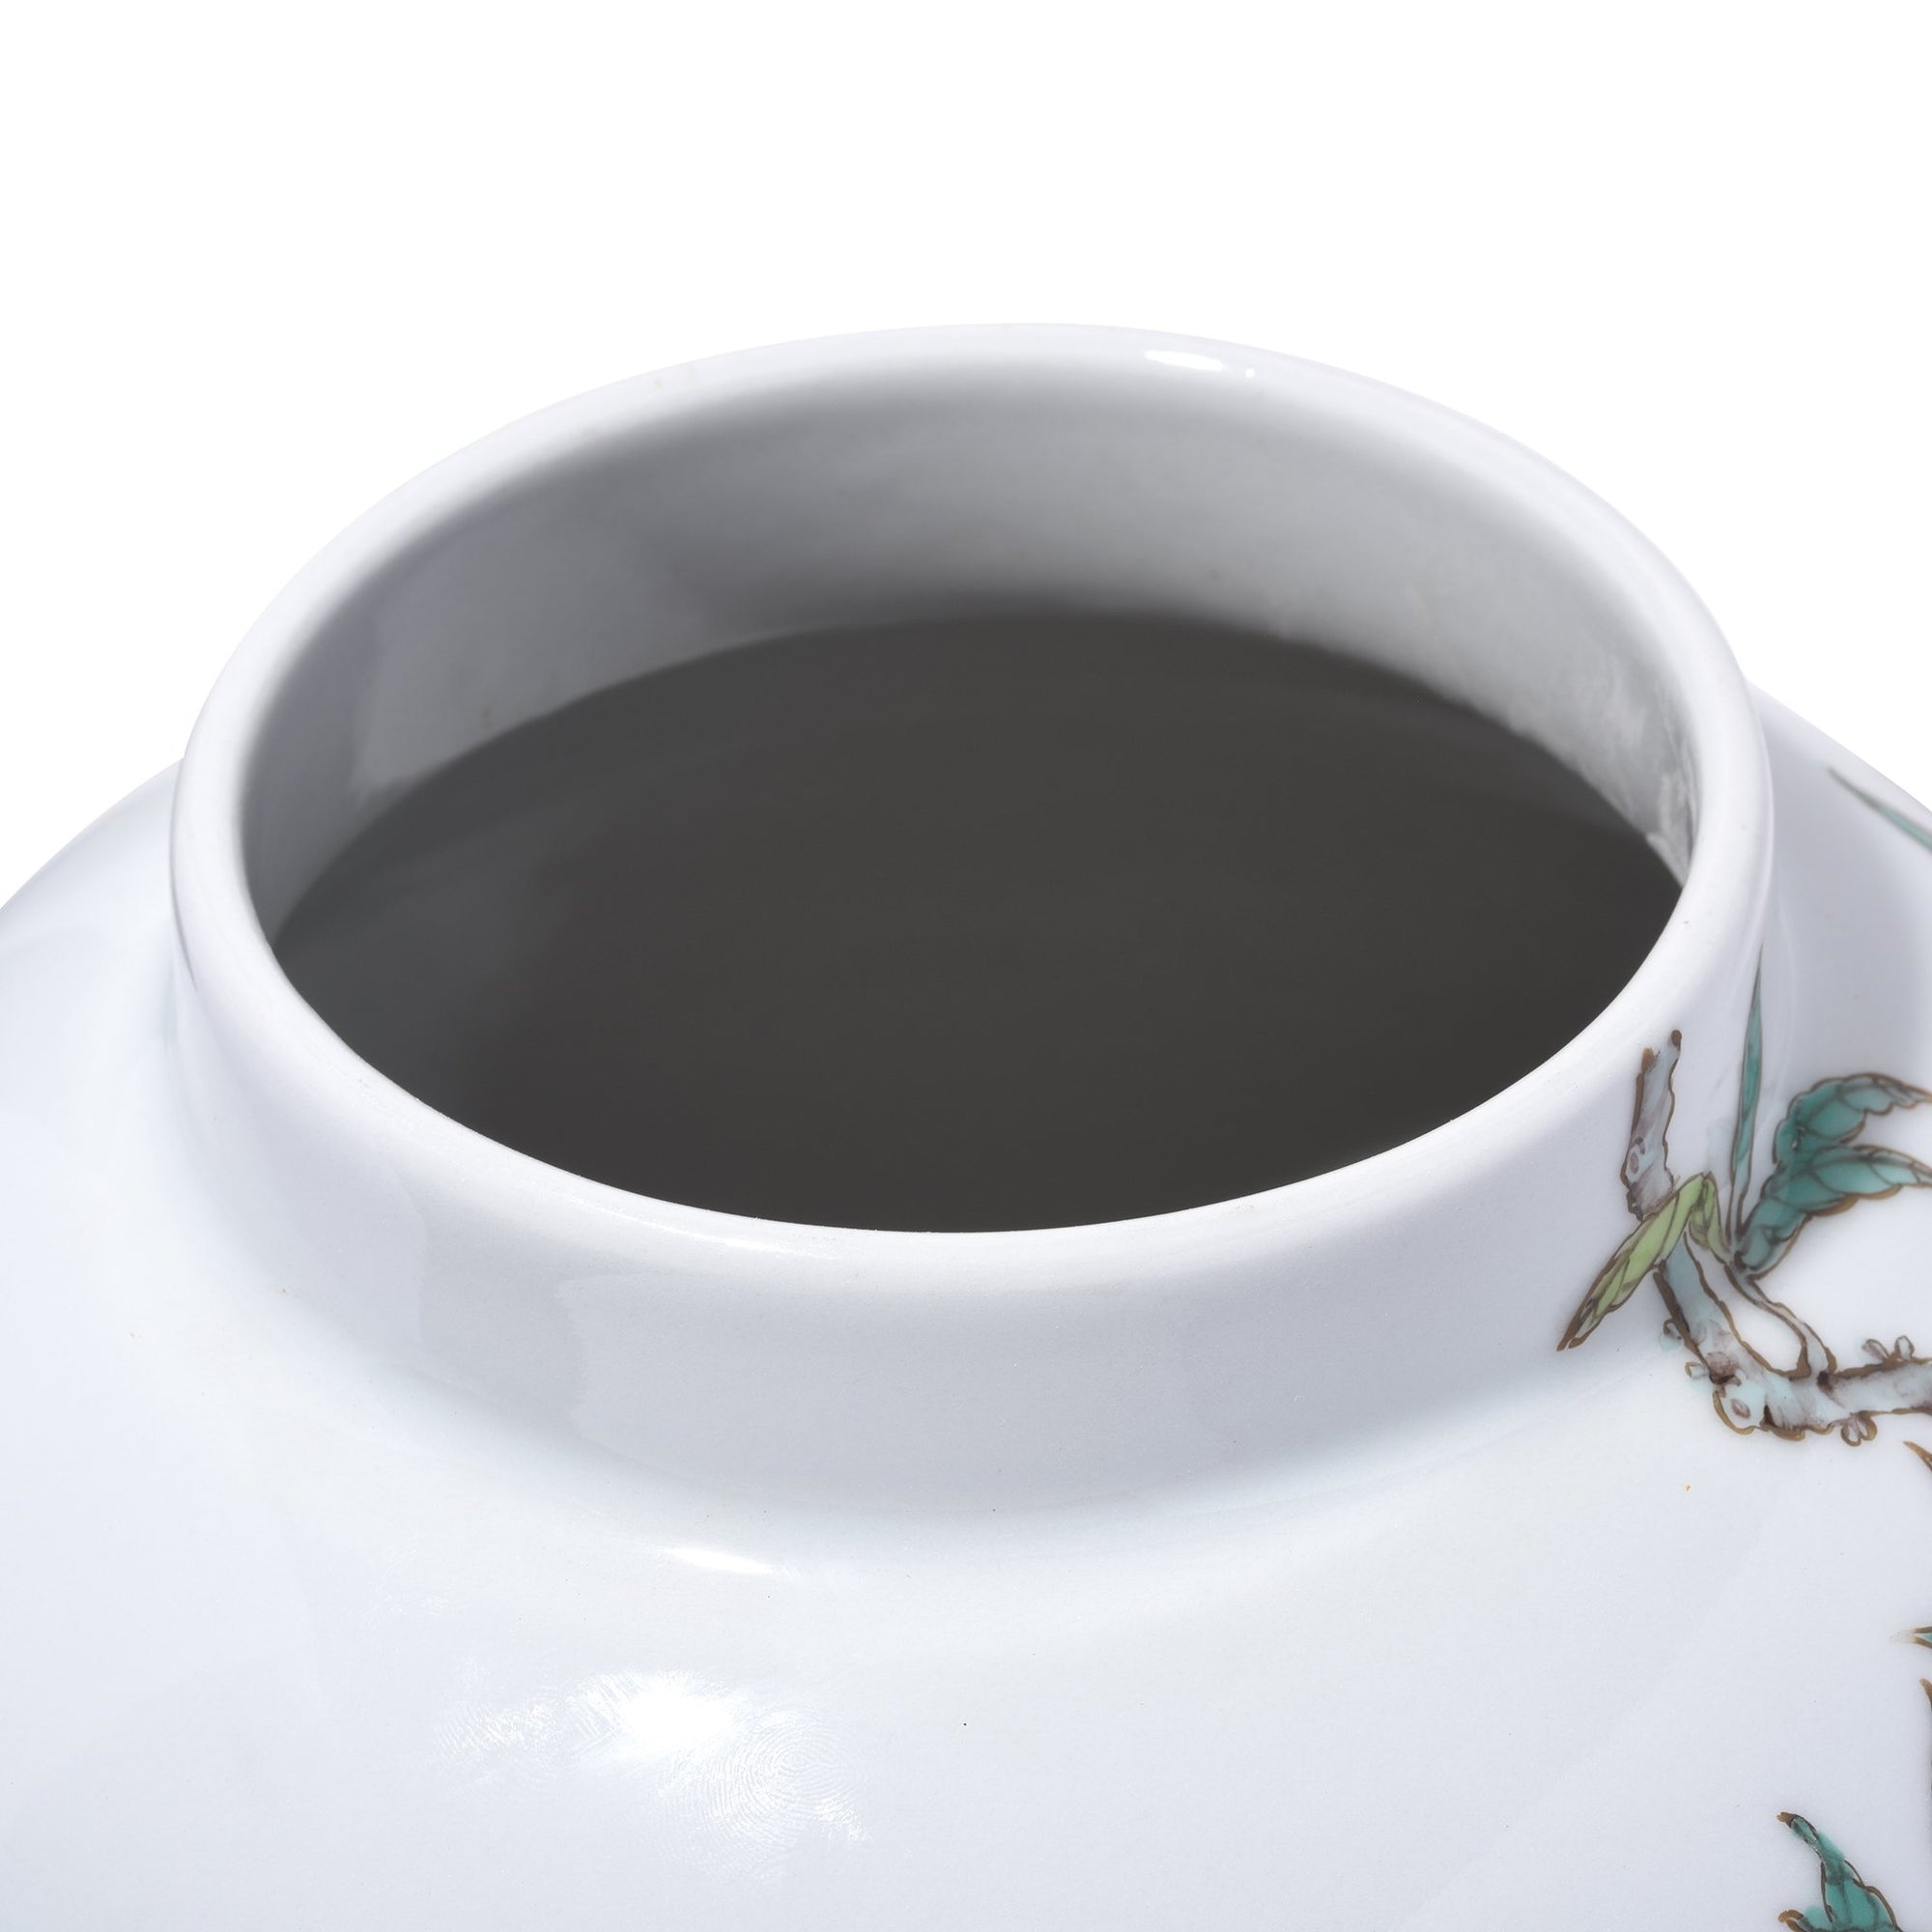 Chinese reproduction Porcelain Temple Jar - Nine Peach Design